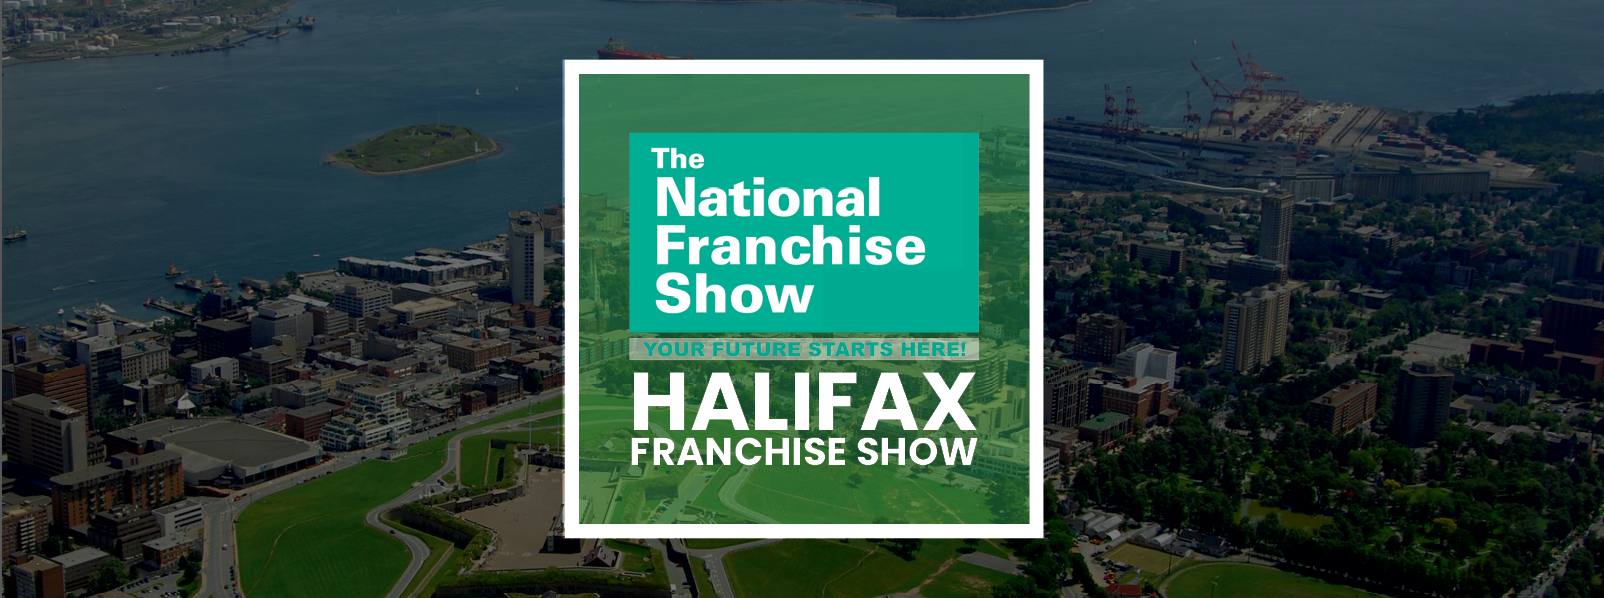 Halifax Franchise Expo